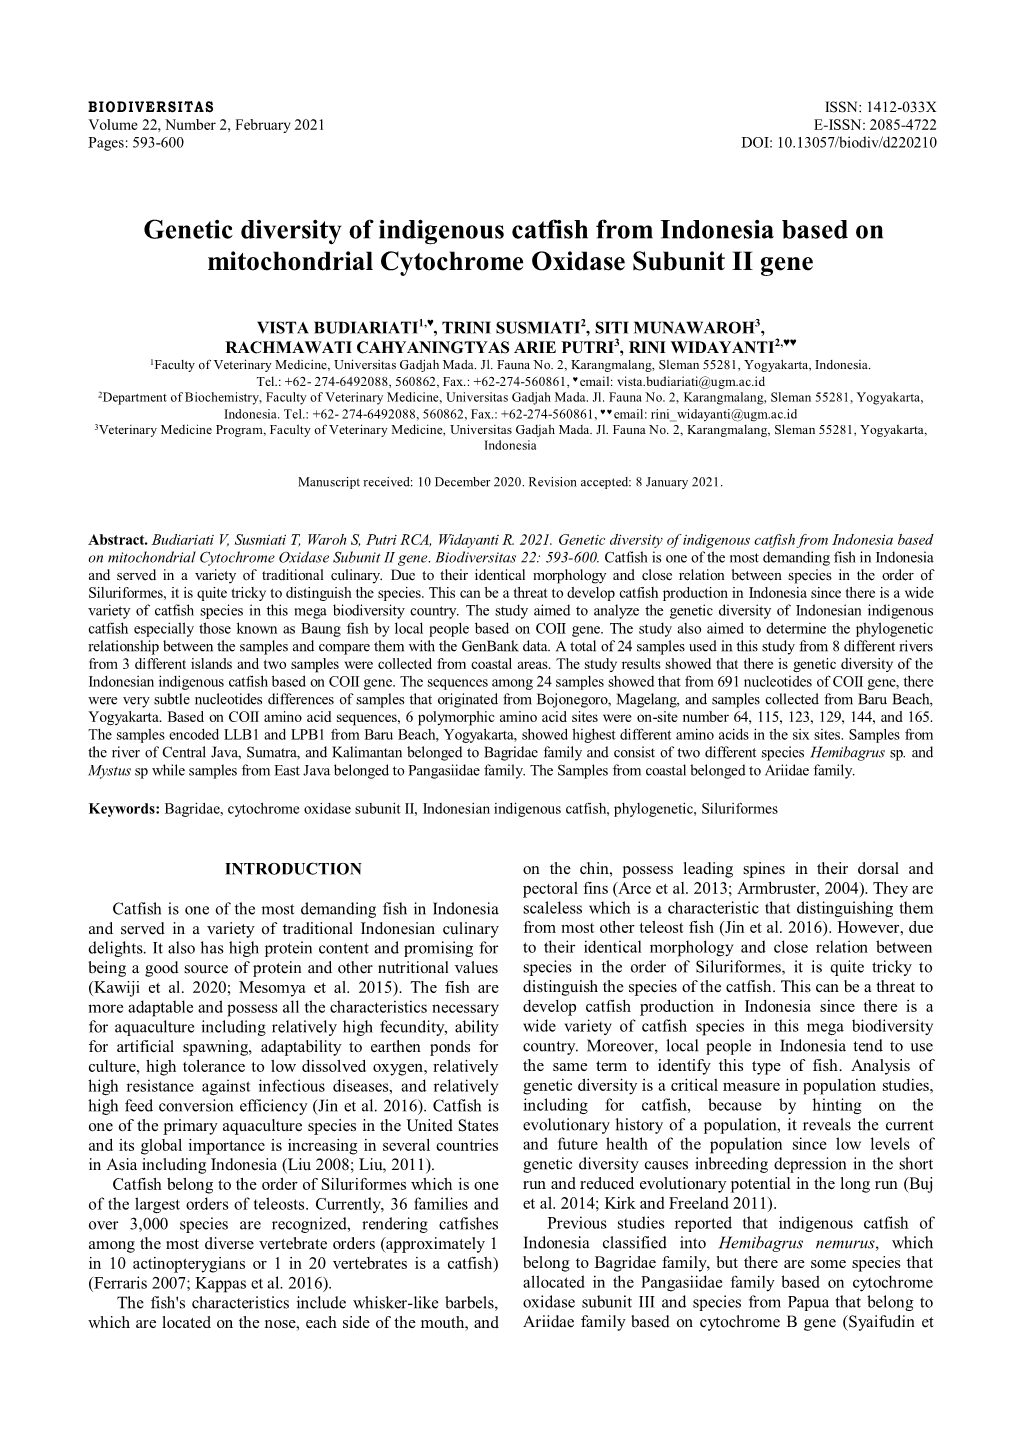 Genetic Diversity of Indigenous Catfish from Indonesia Based on Mitochondrial Cytochrome Oxidase Subunit II Gene